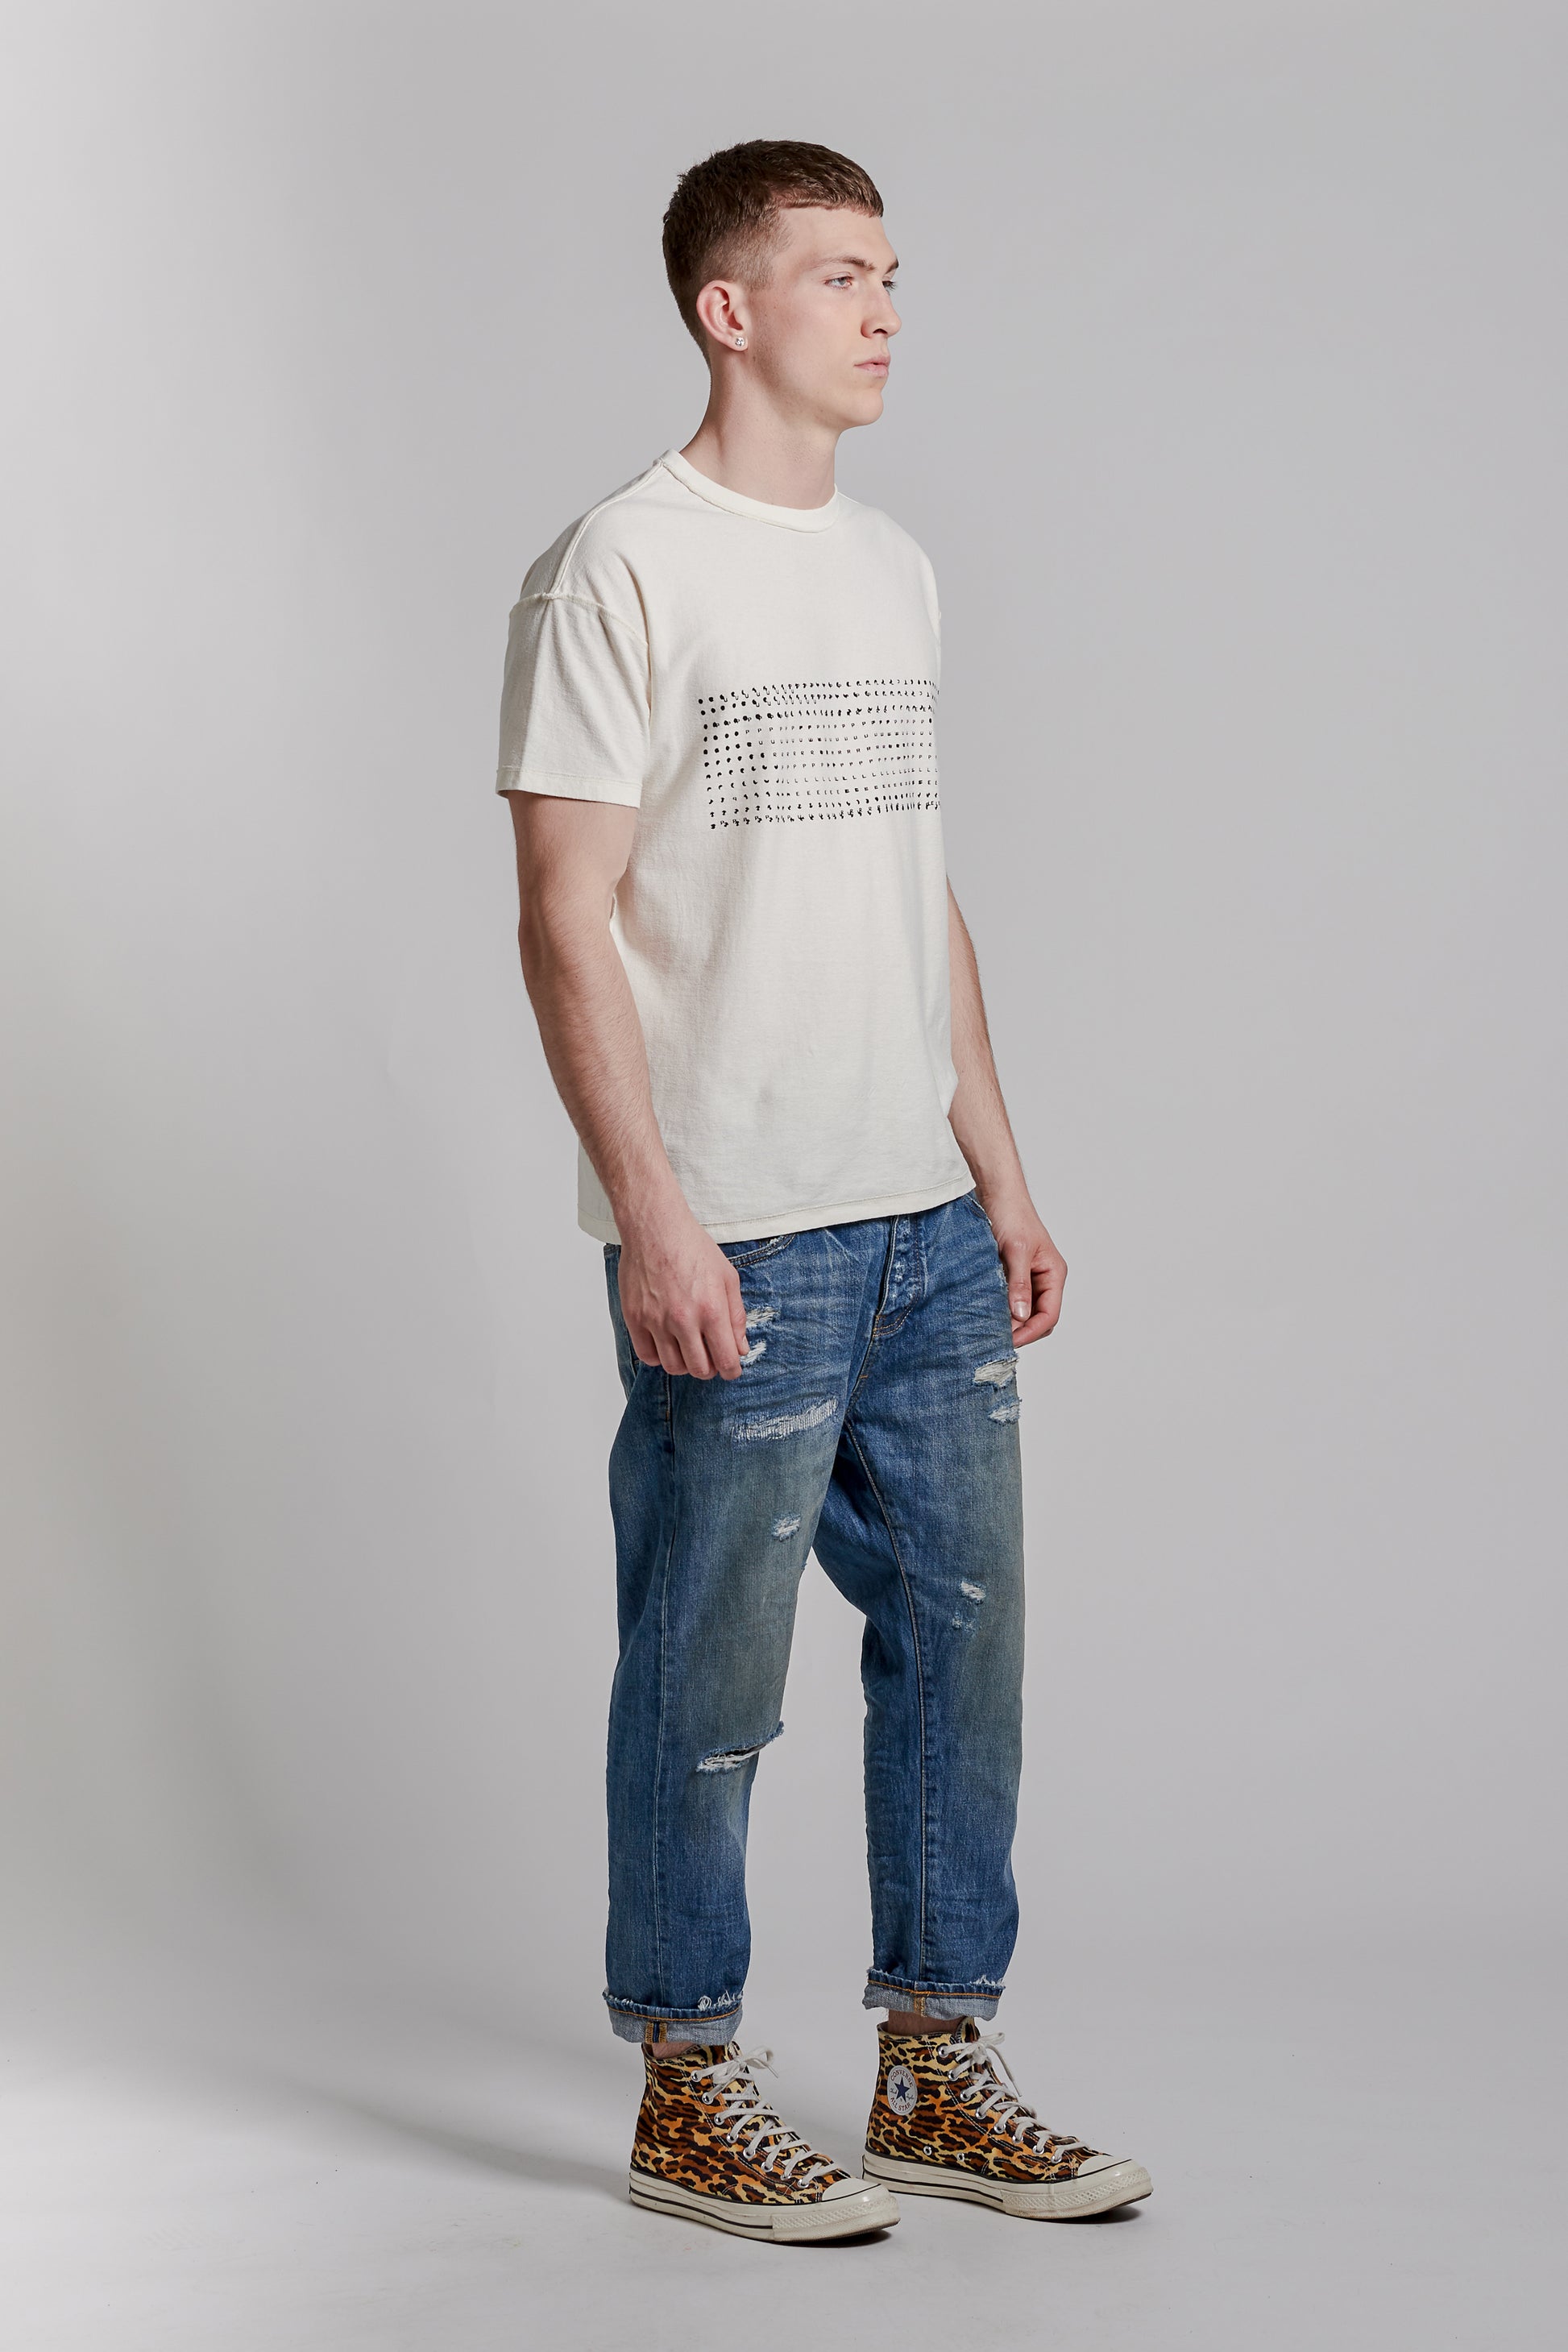 PURPLE BRAND - Men's Denim Jean - Long Rise Relaxed - Style No. P003 - Indigo Vintage Distress Crop - Model Side Pose